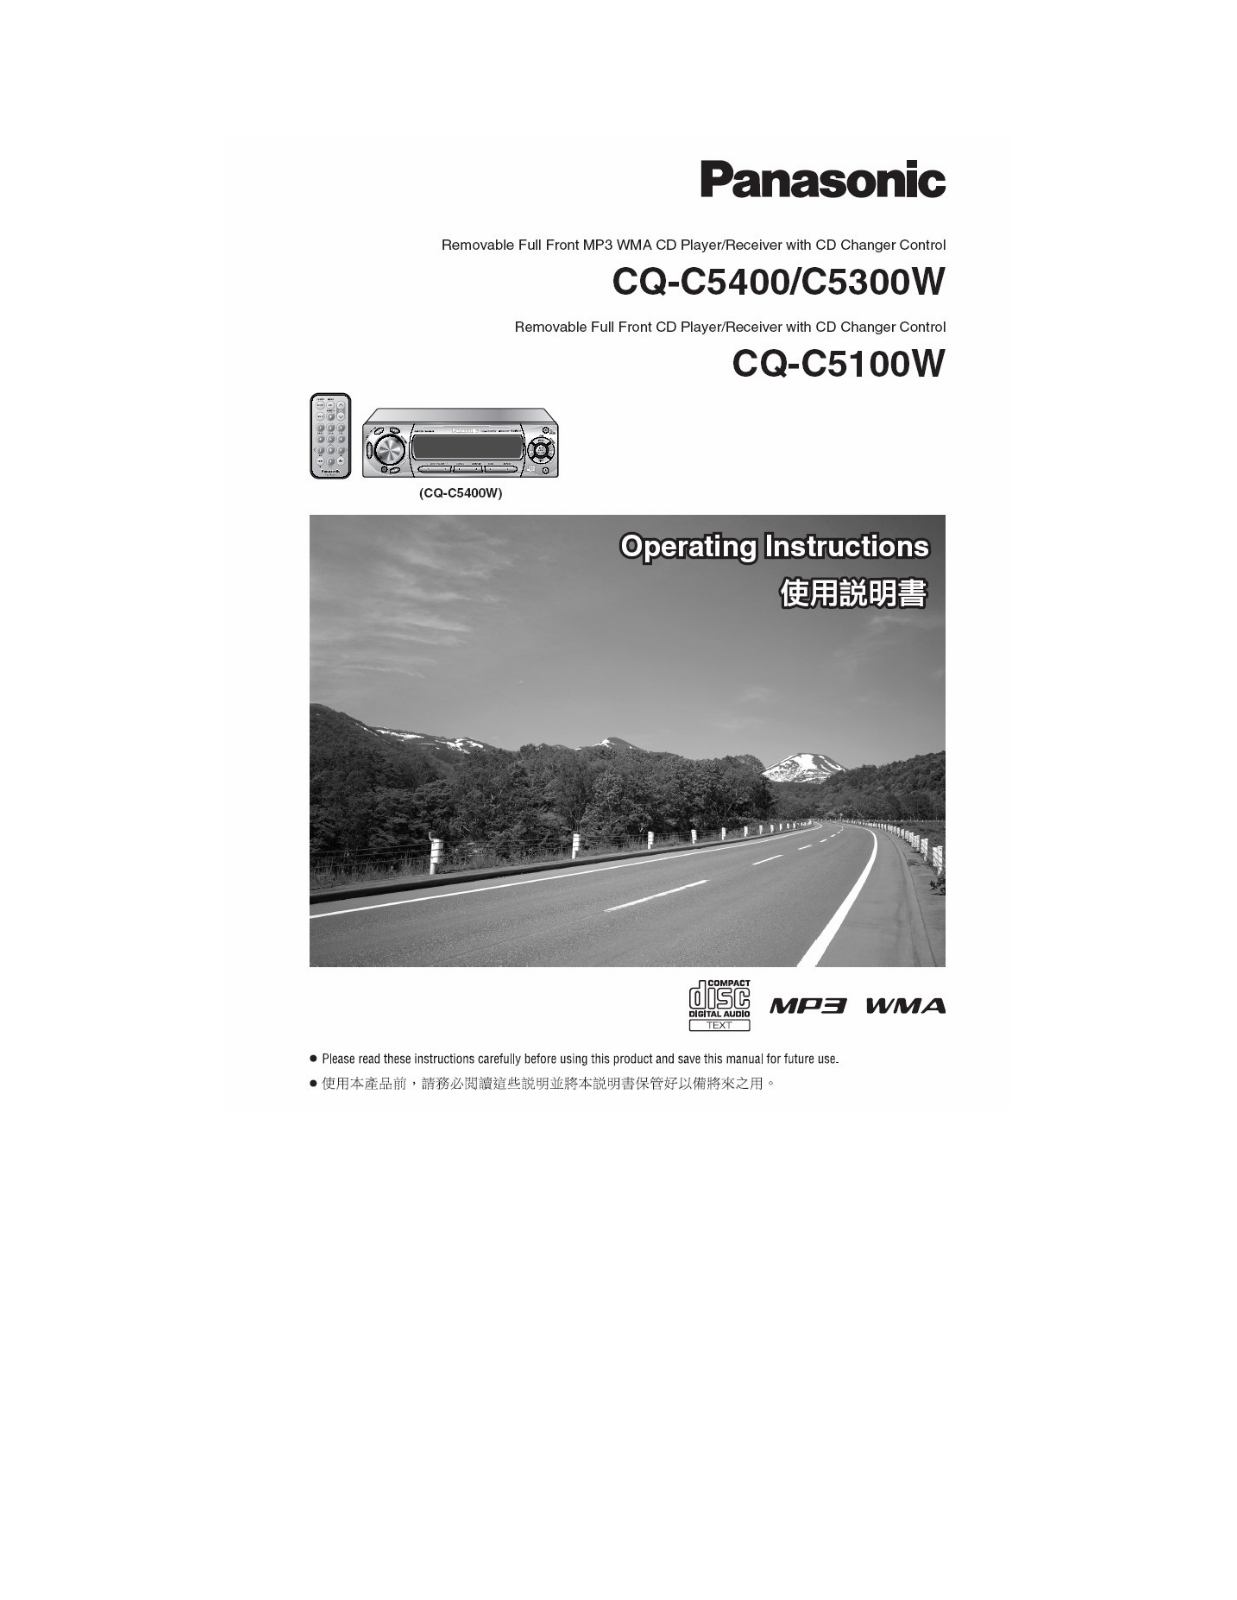 Panasonic CQ-C5100W, CQ-C5400, CQ-C5300W User Manual